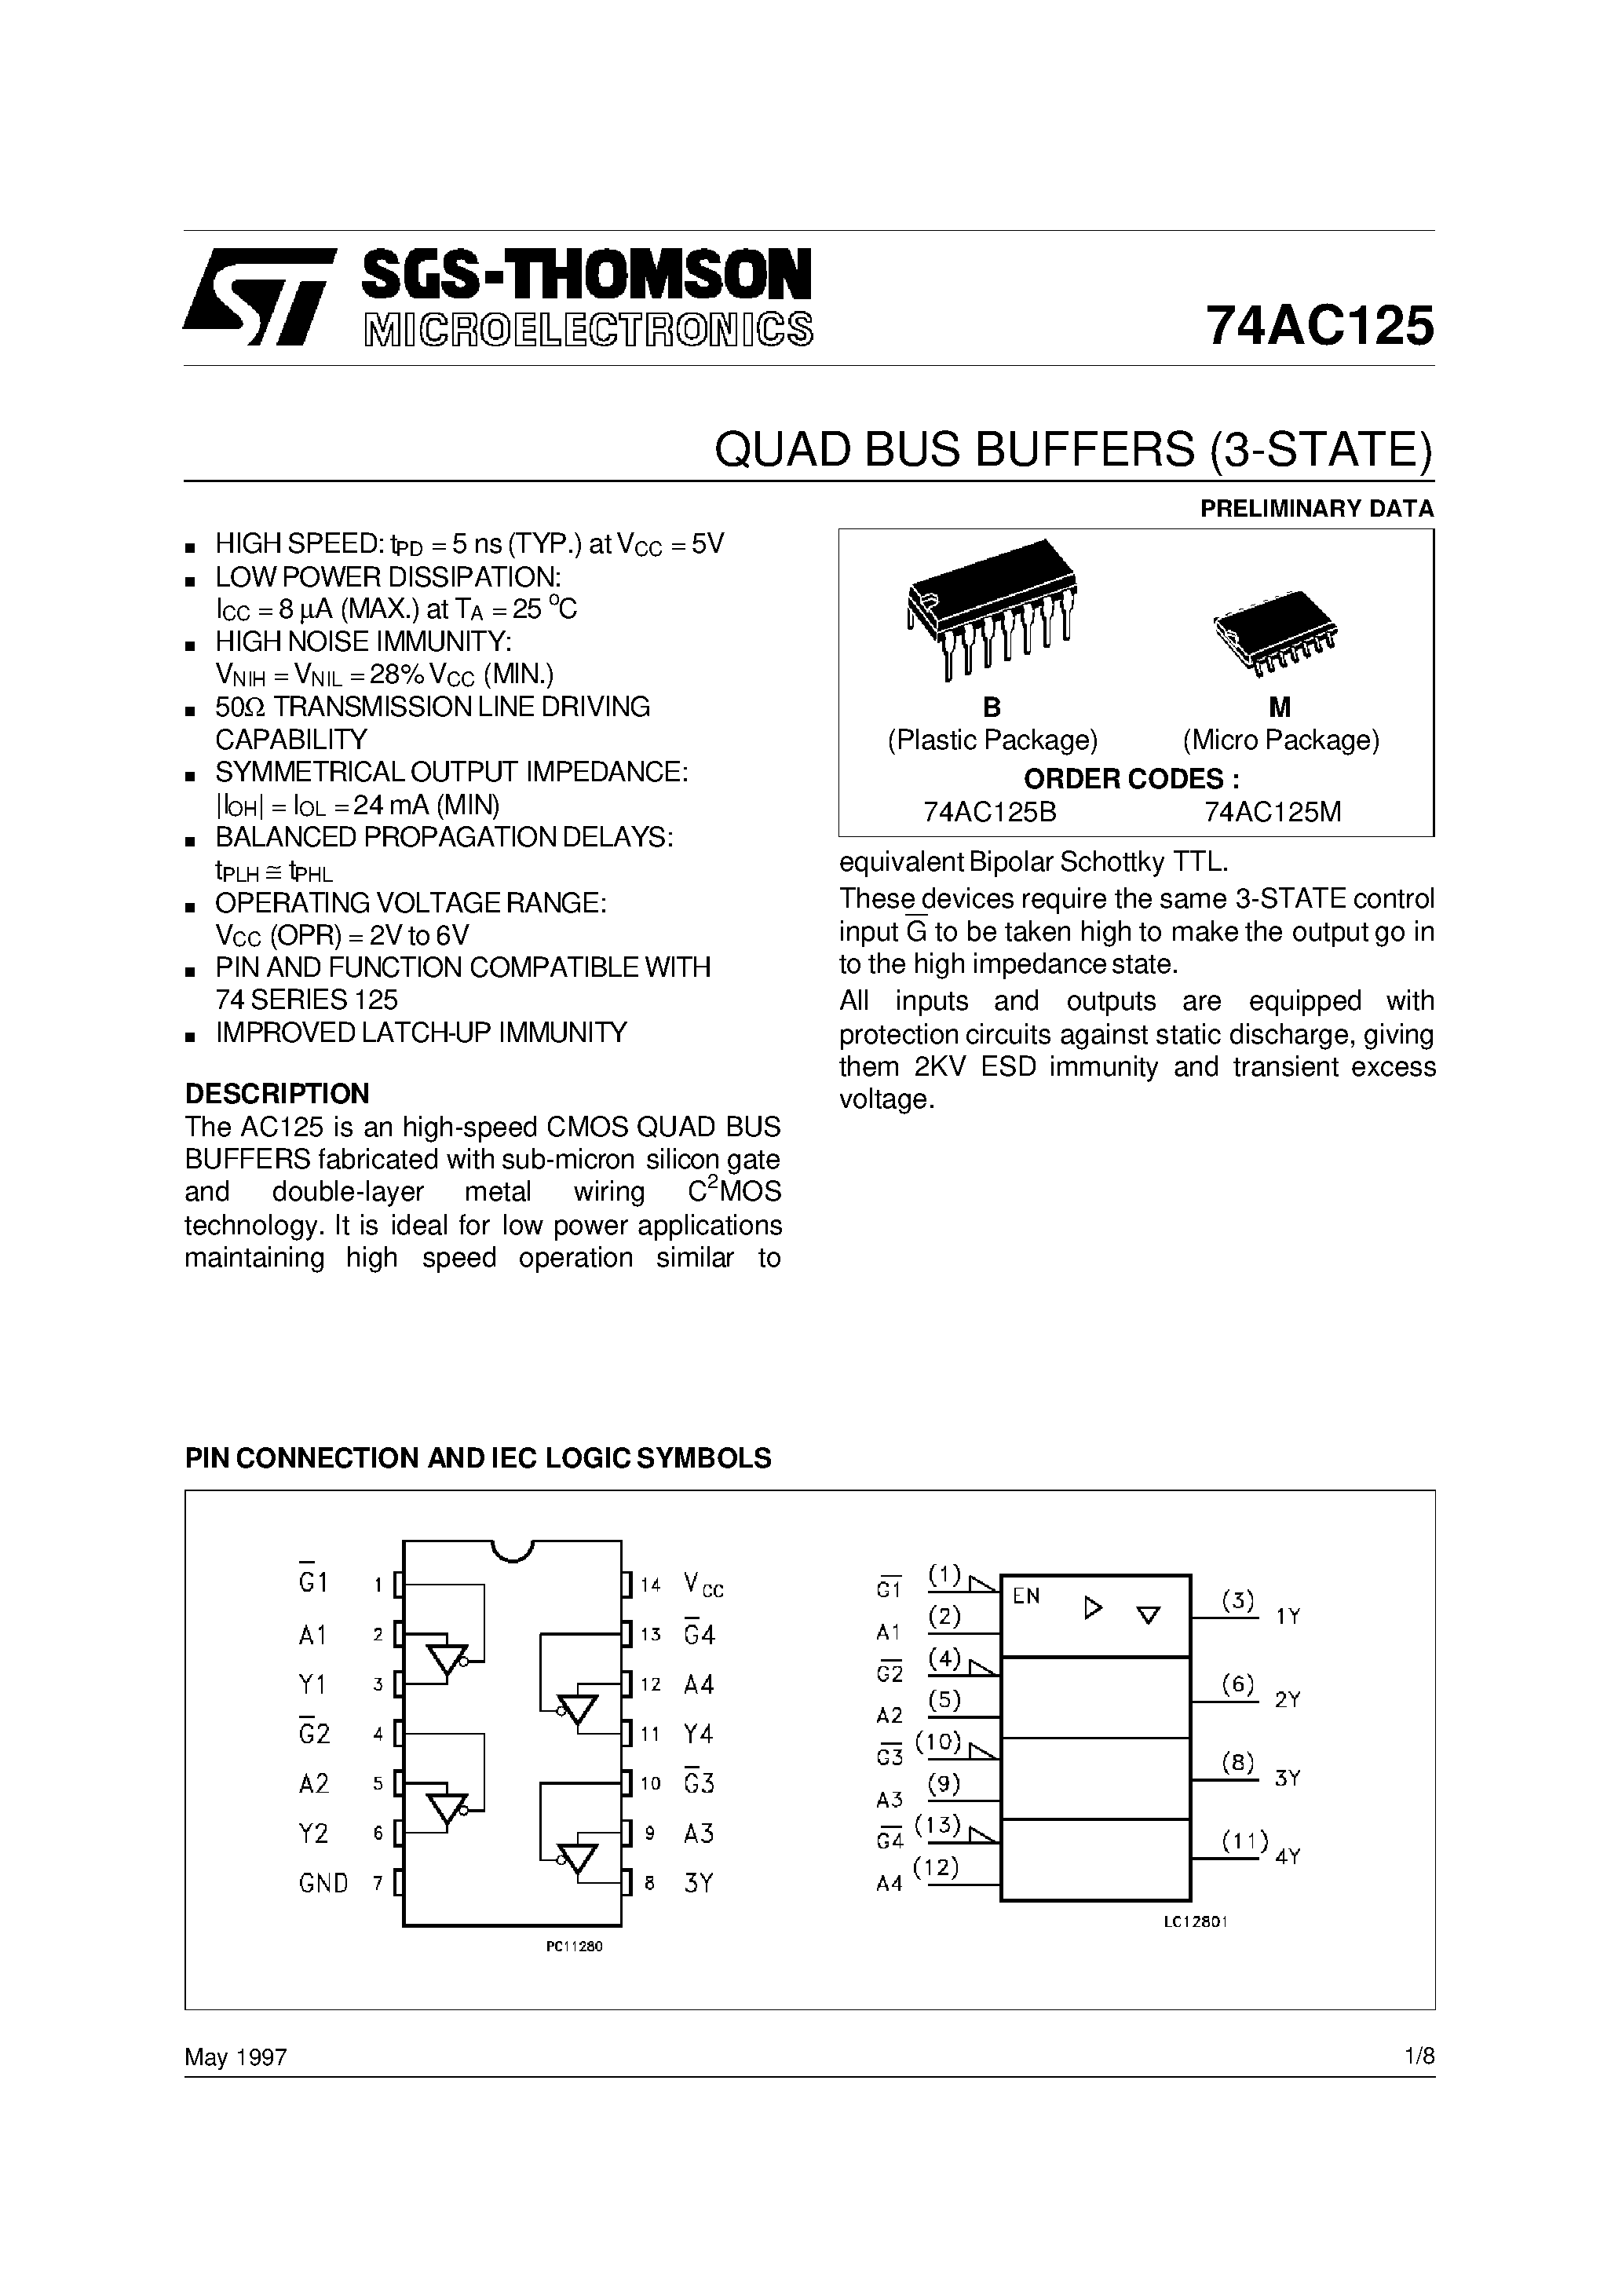 Datasheet 74AC125M - QUAD BUS BUFFERS 3-STATE page 1